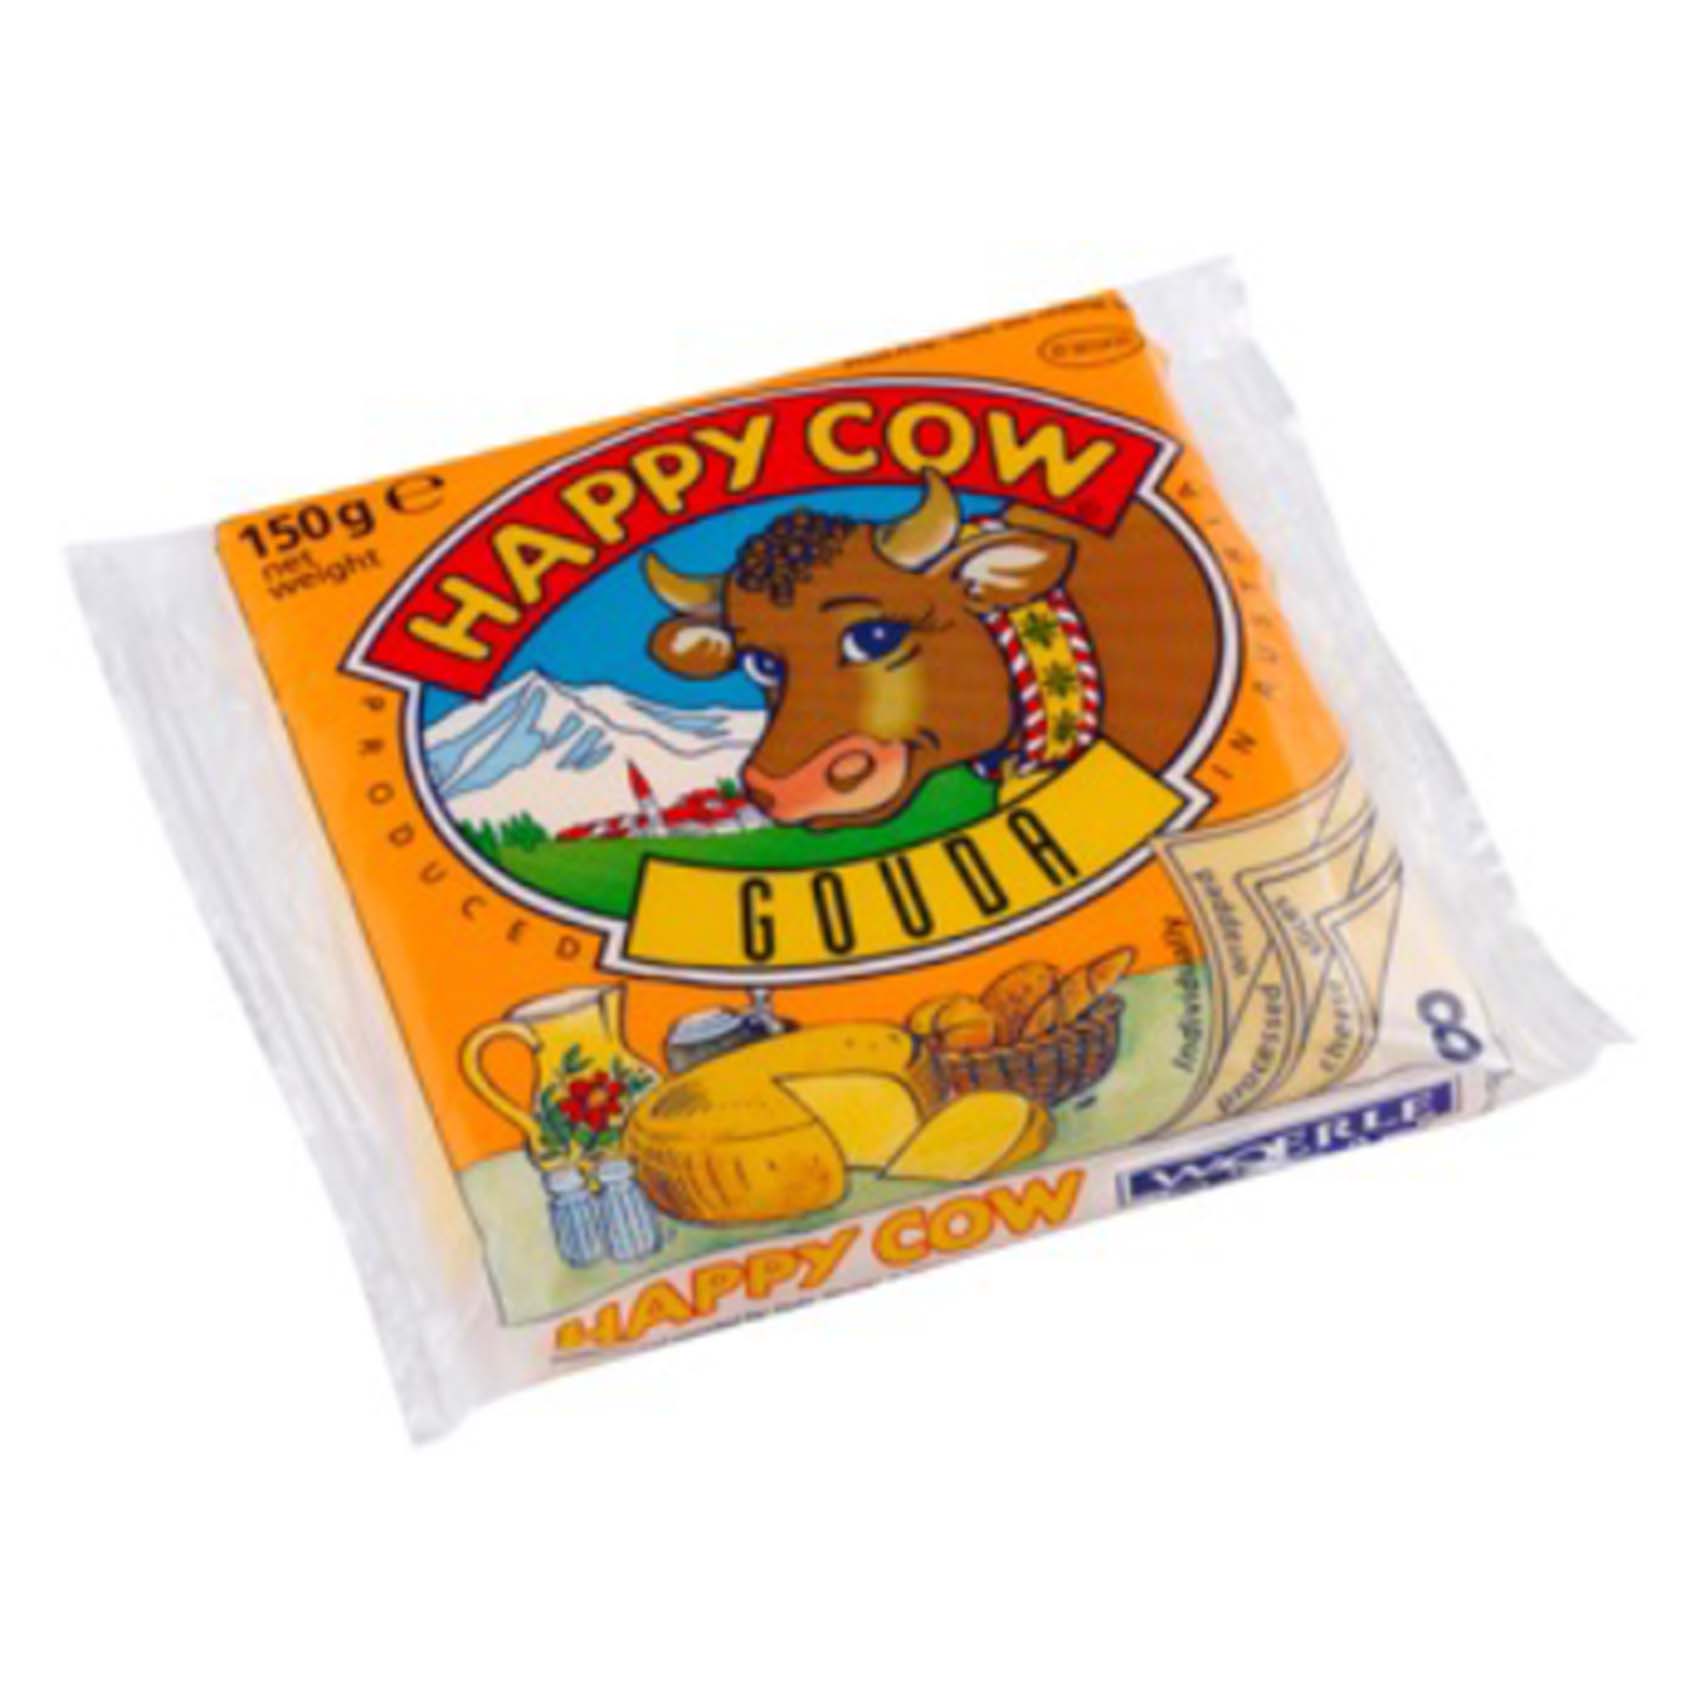 Happy Cow 8 Slices Gouda 150G